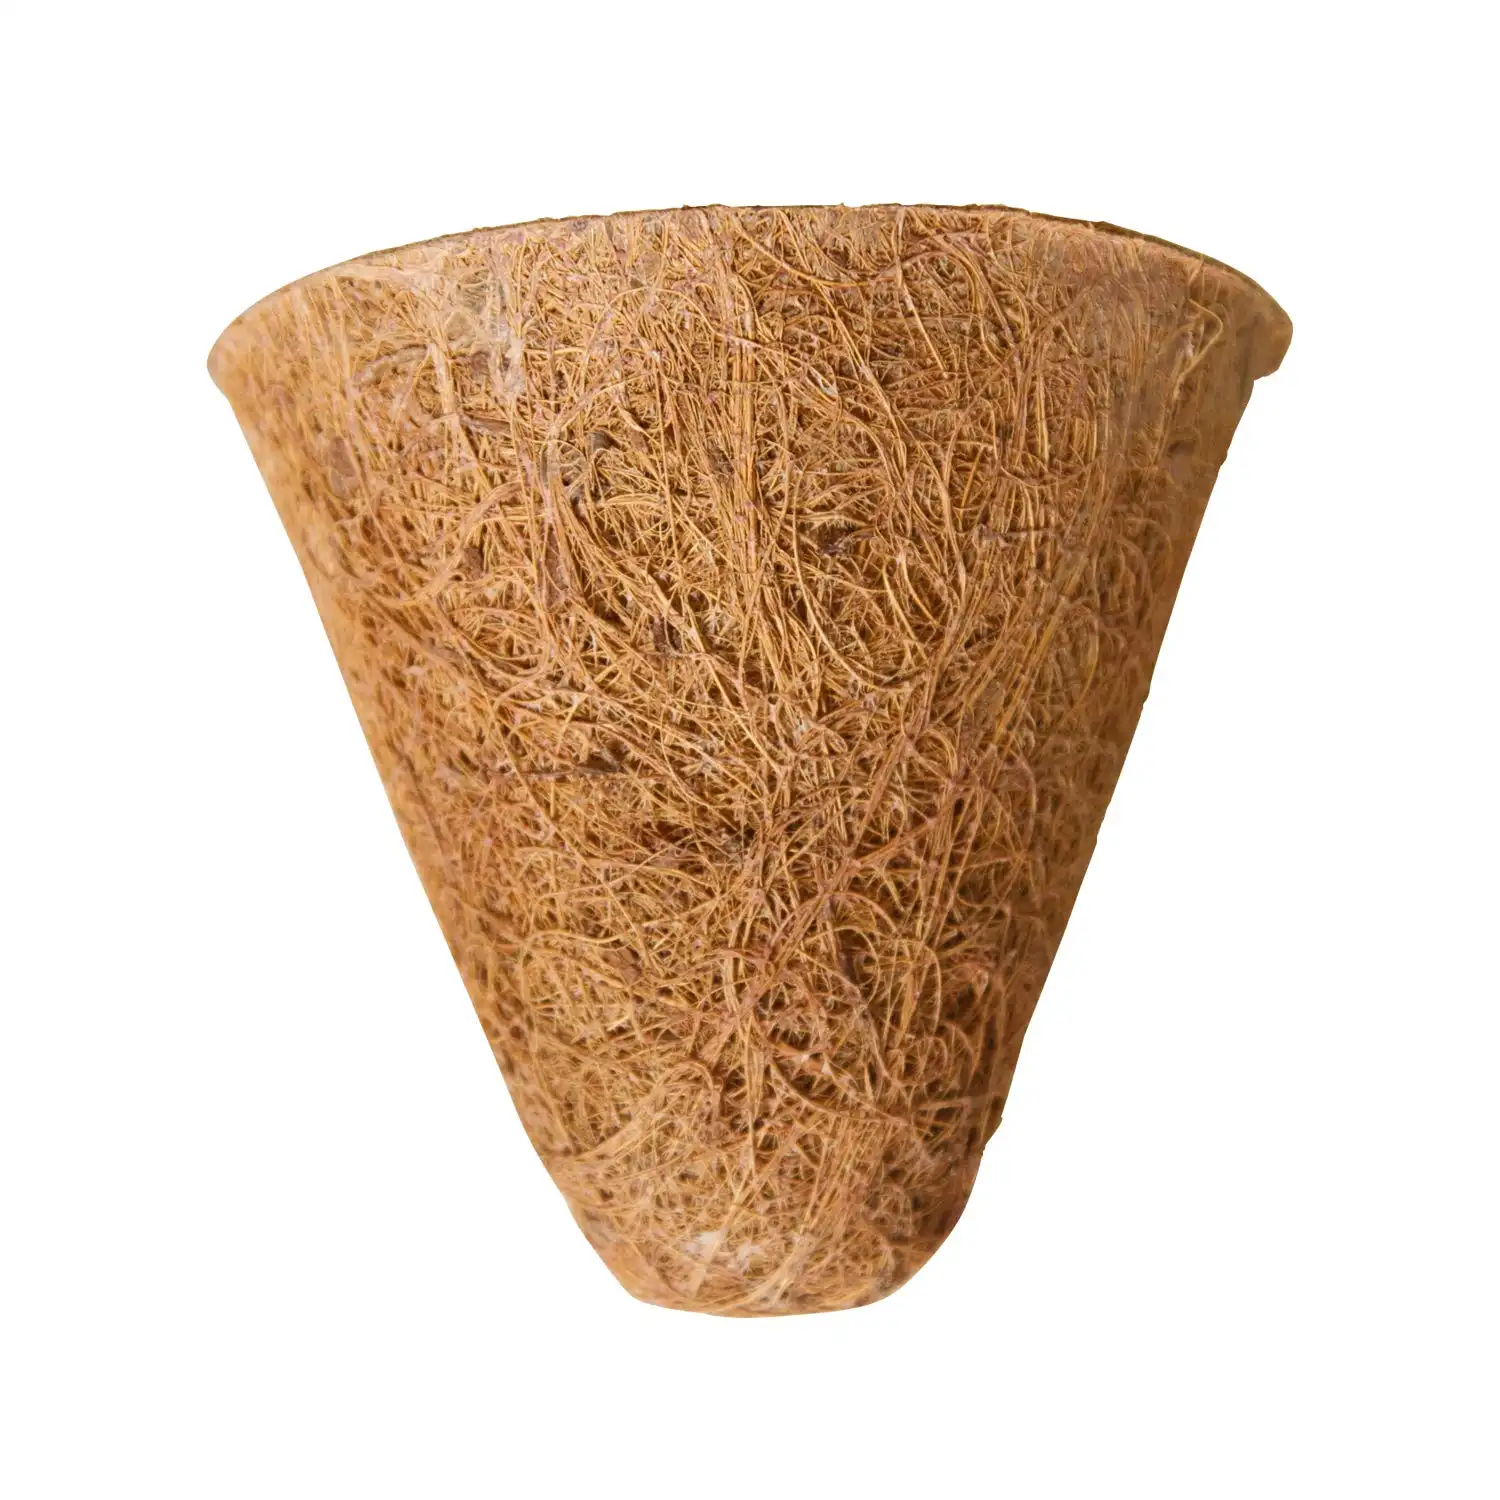 Piantina torba vaso piantare semi germinazione coco coir Cup giardino germinazione vasi da vivaio